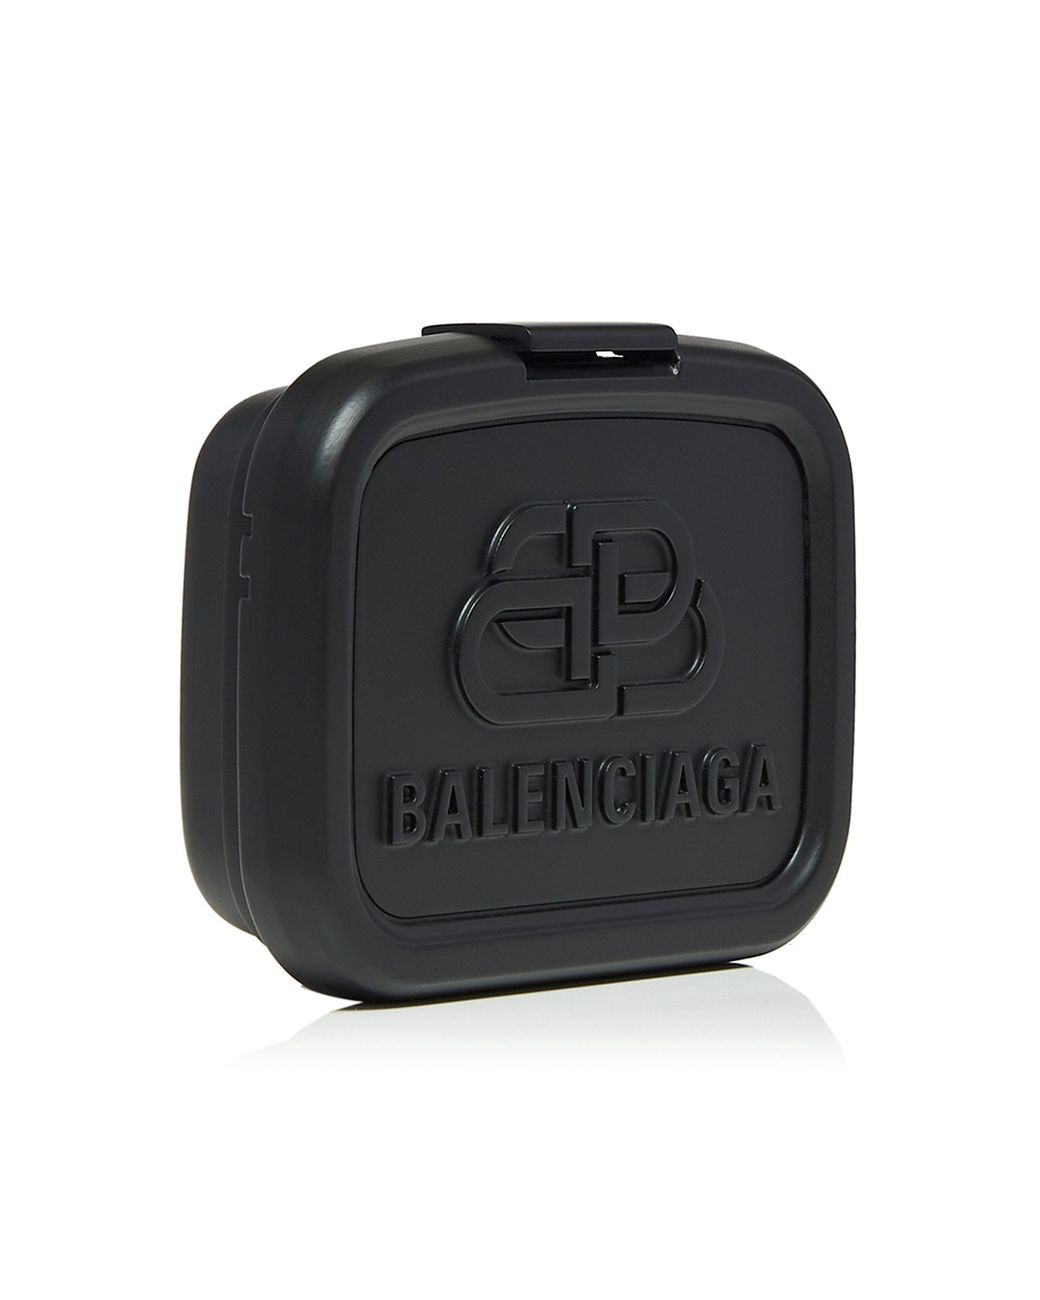 Balenciaga Lunch Box Mini Leather Case Bag in Black | Lyst